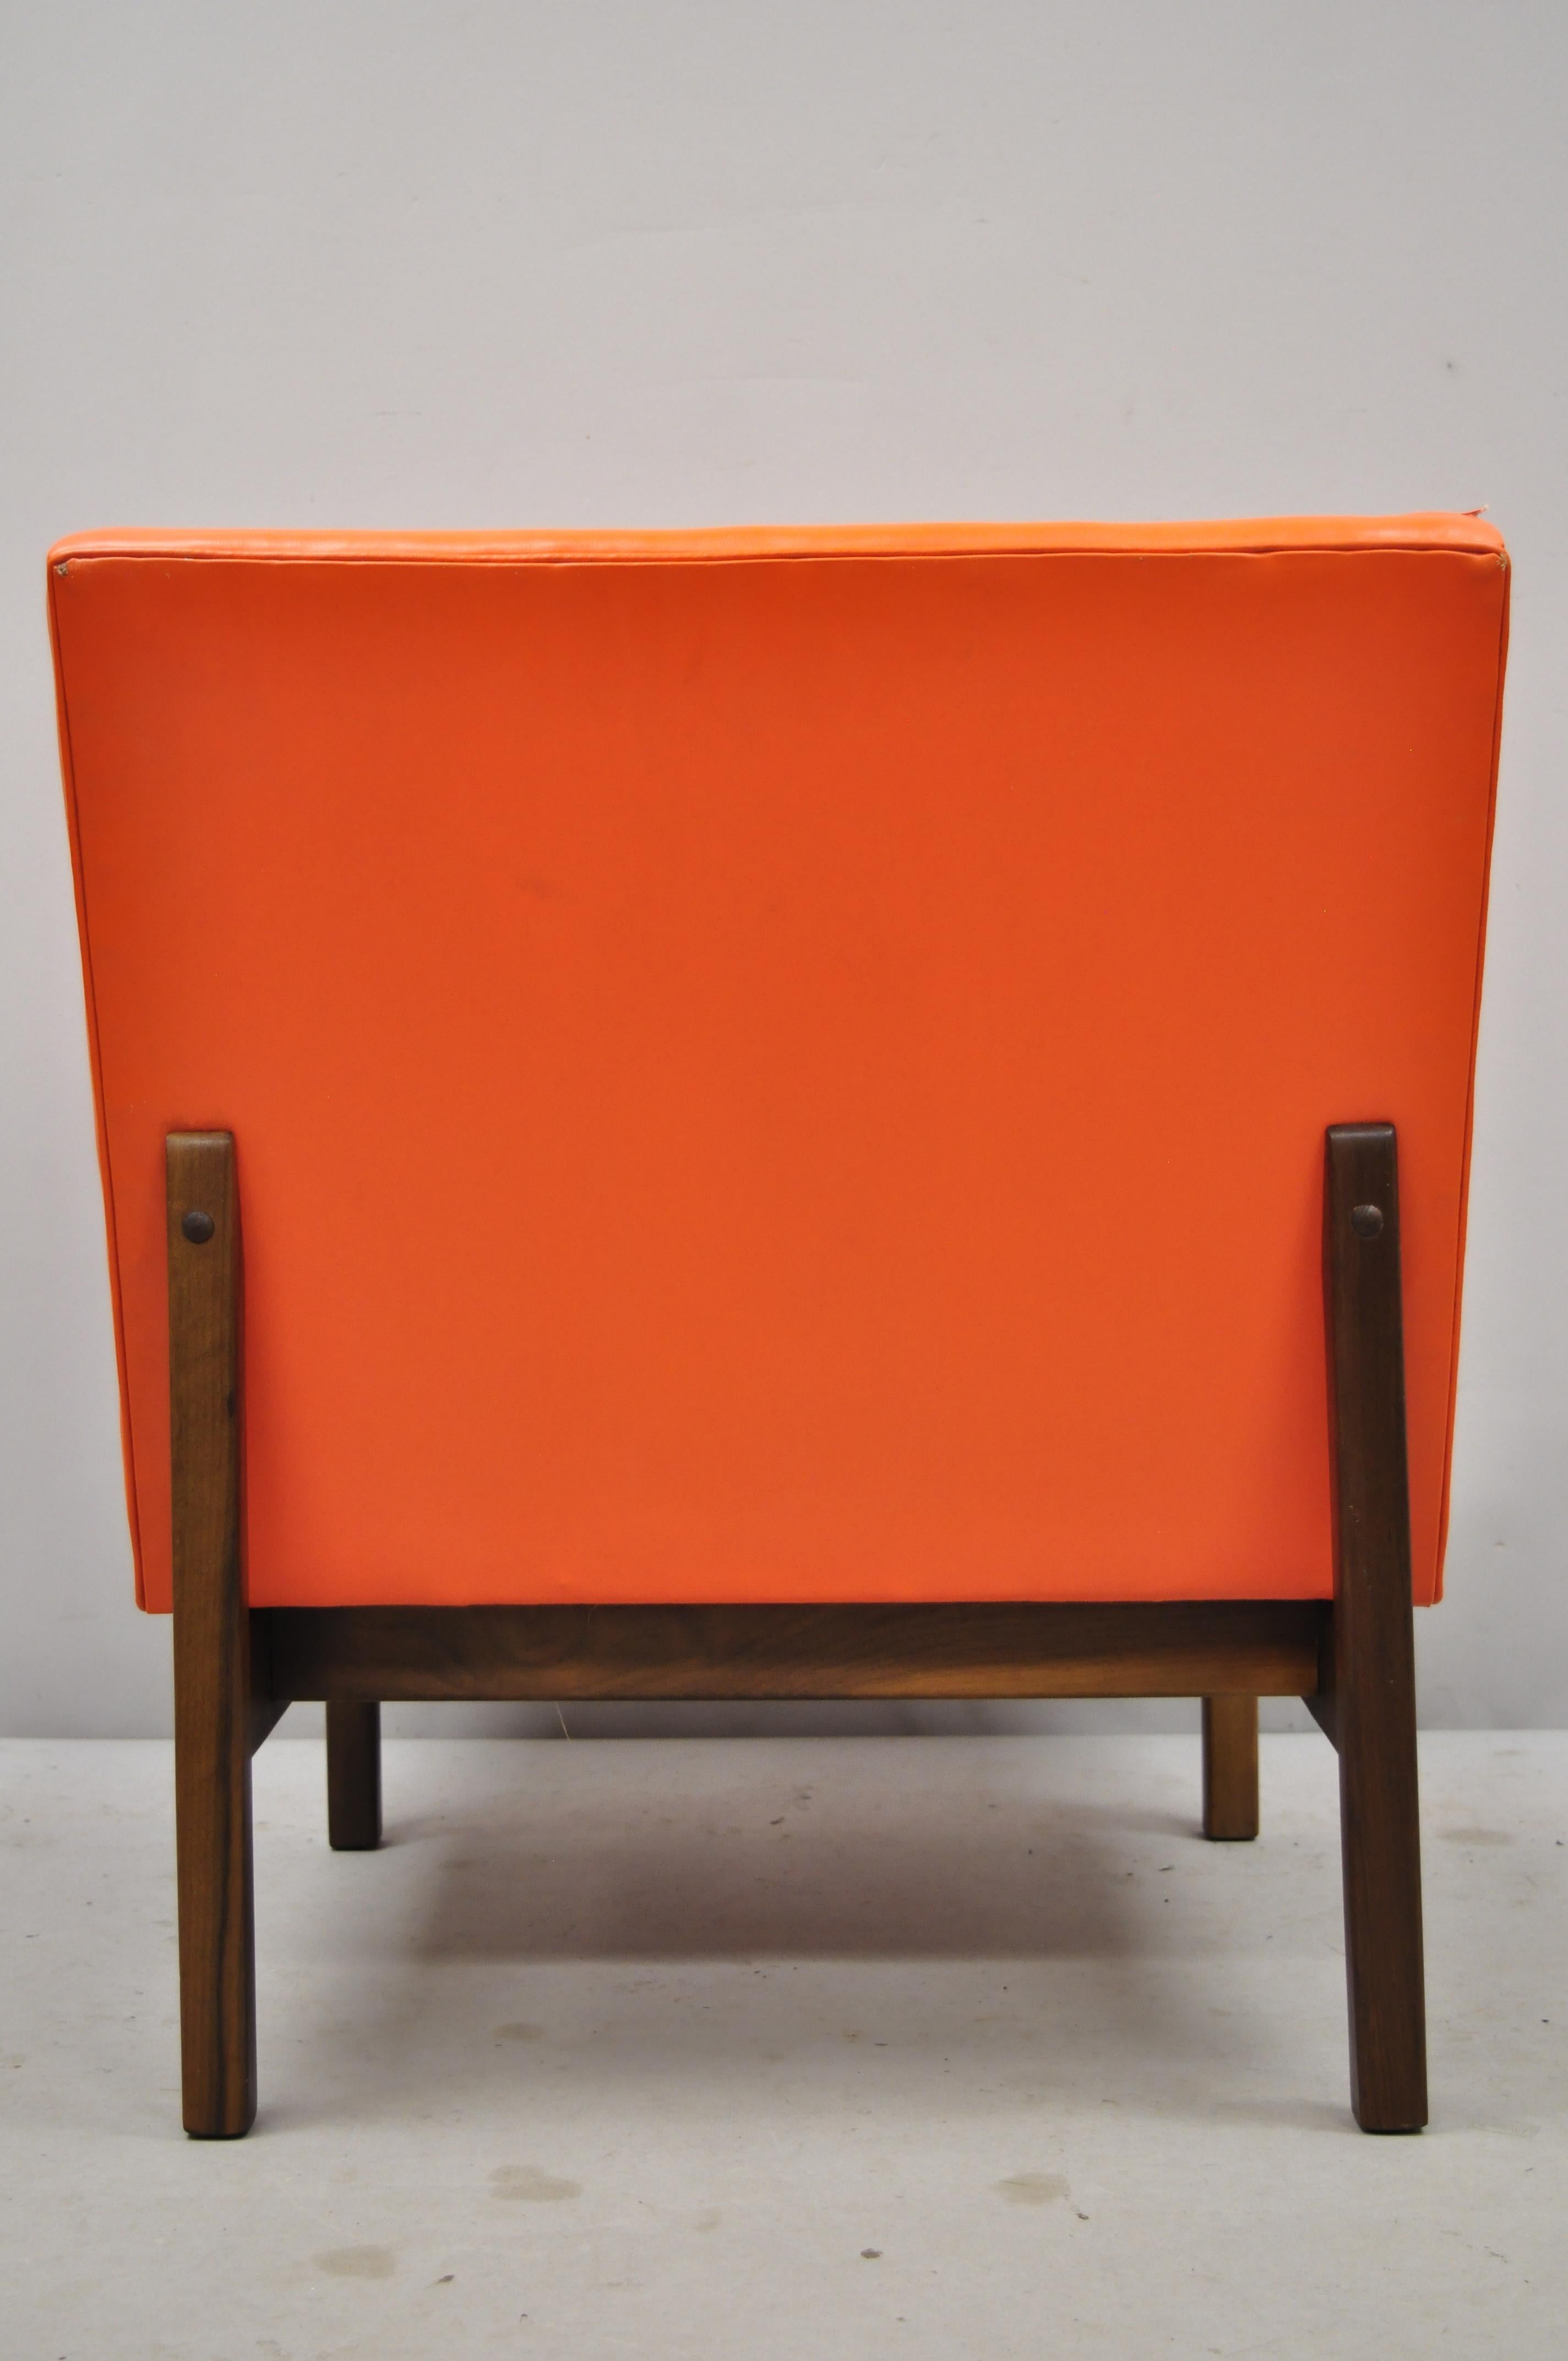 Naugahyde Orange Milo Baughman for Thayer Coggin Teak and Vinyl Slipper Lounge Chair For Sale